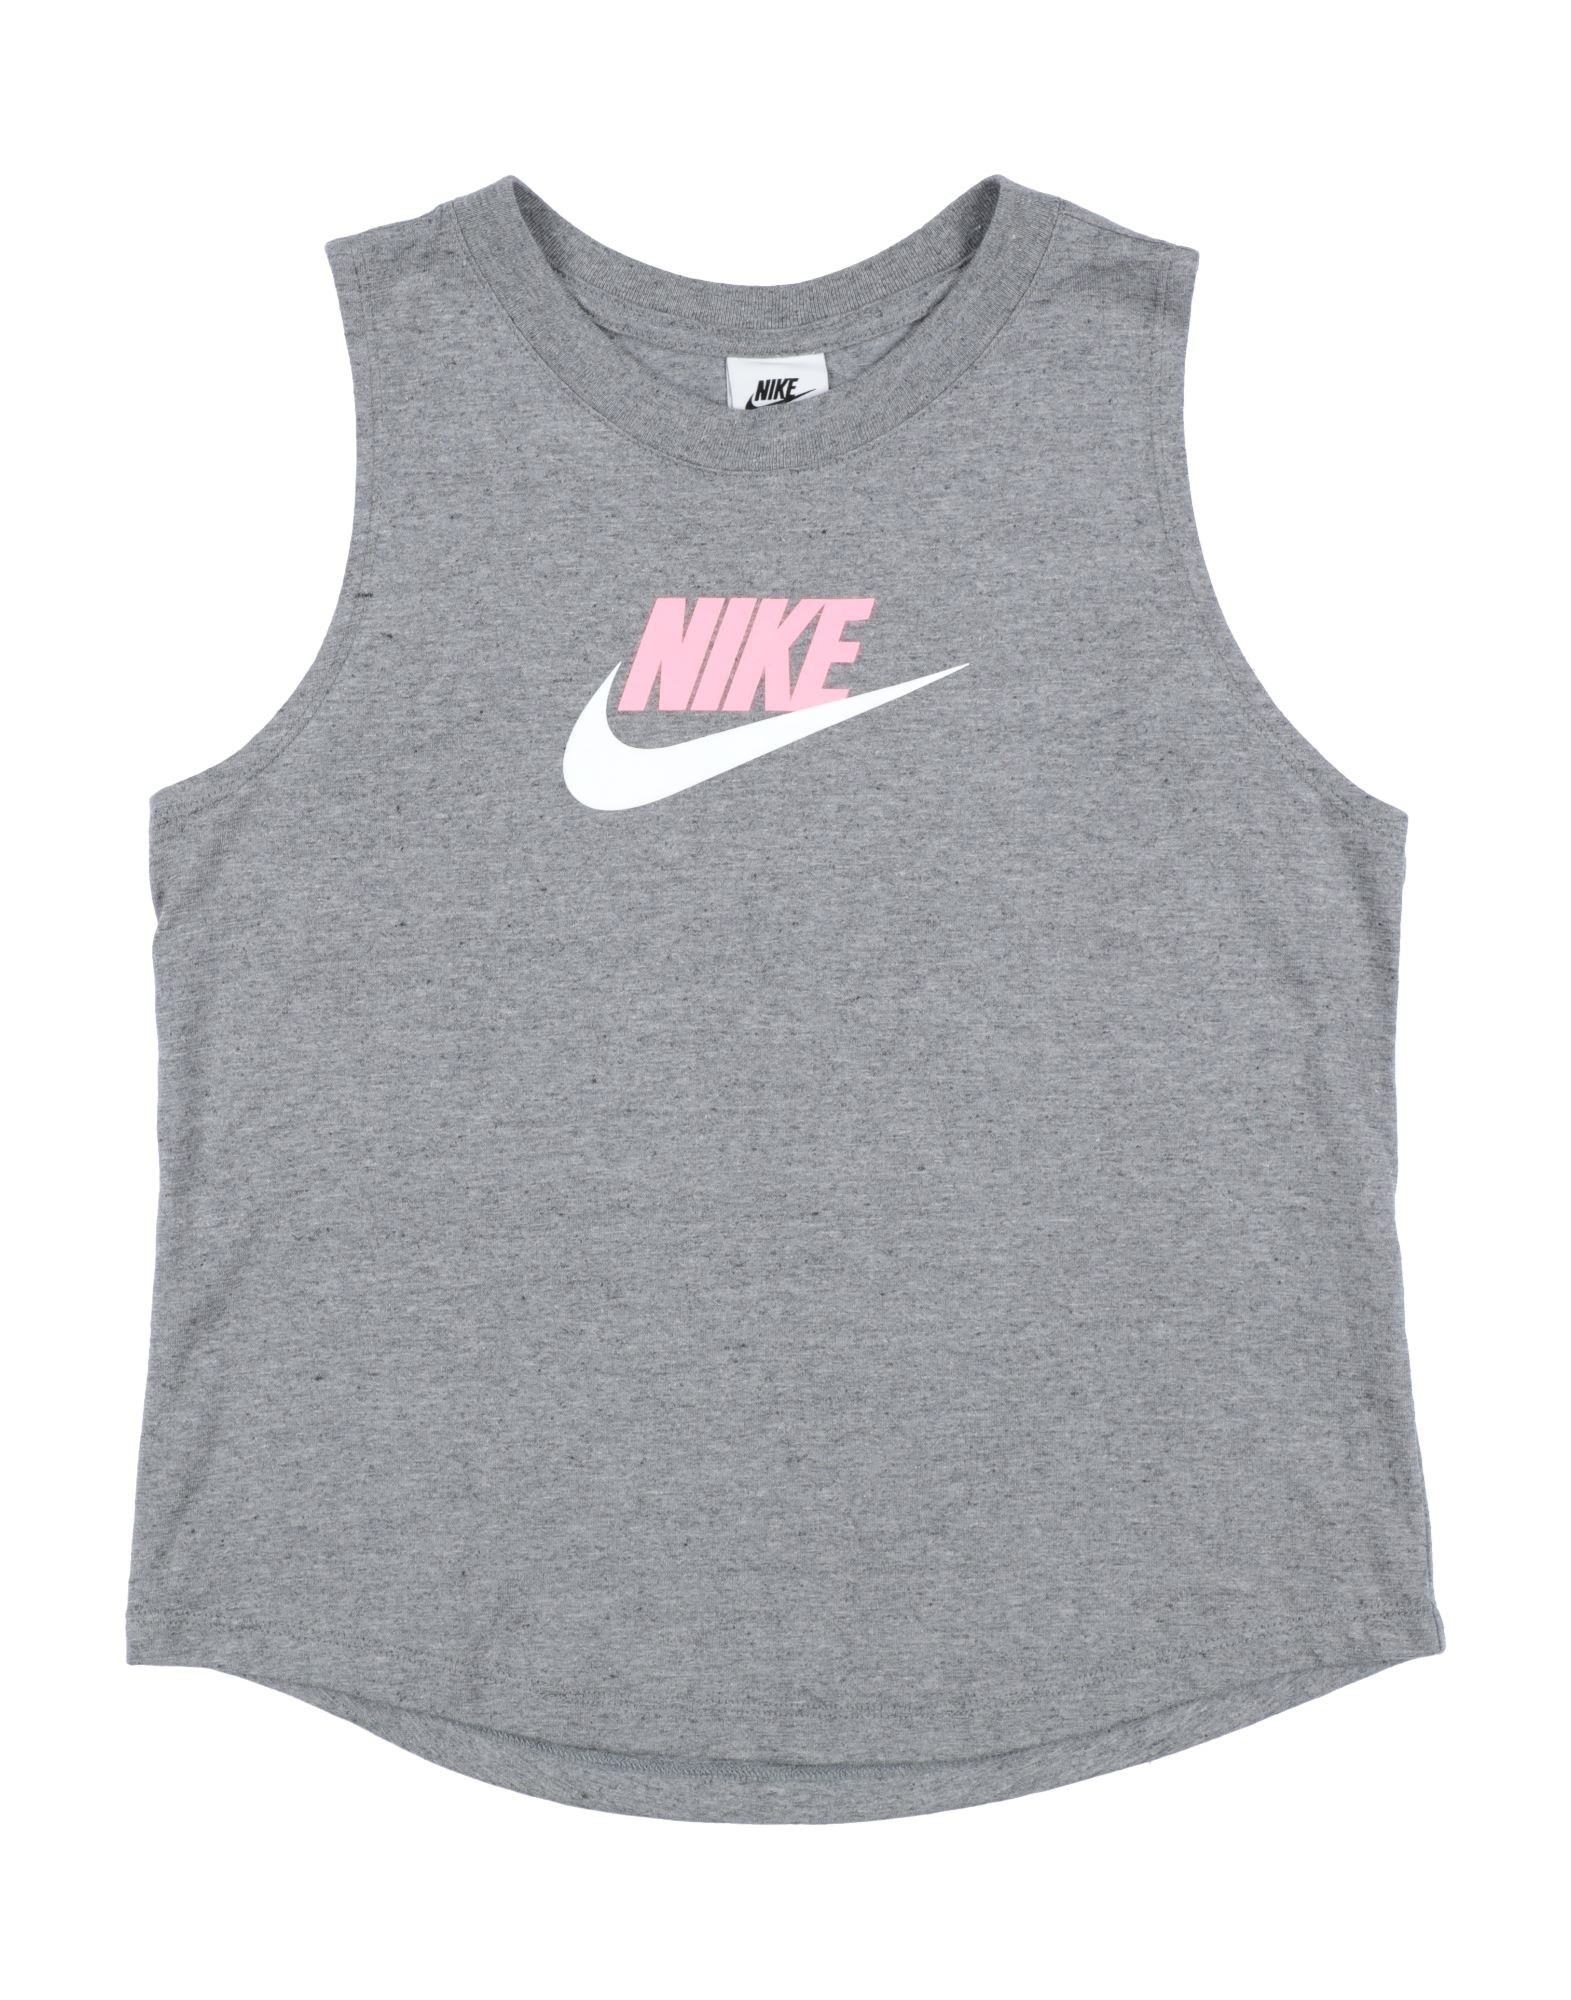 Nike Kids' T-shirts In Grey